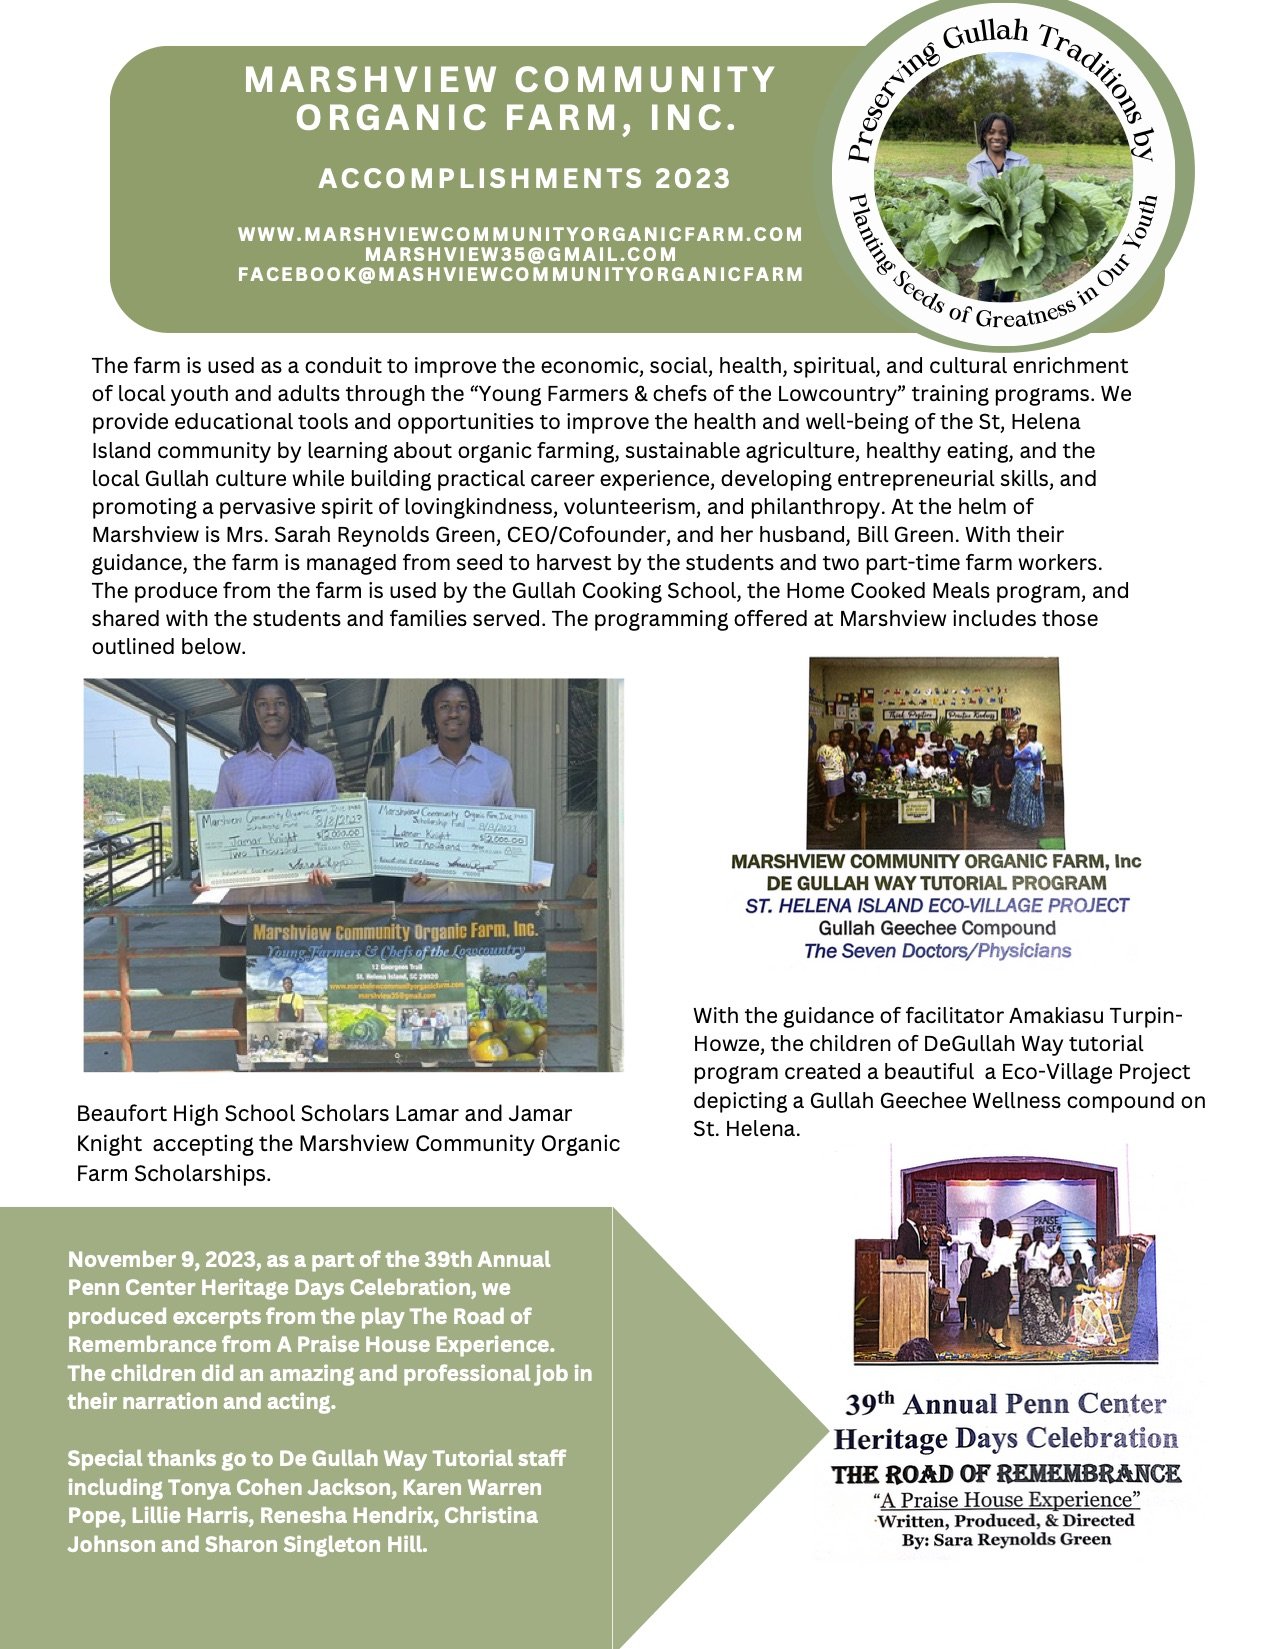 123 - Marshview Community Organic Farm, Inc Accomplishments 2023 in Review (4).jpg